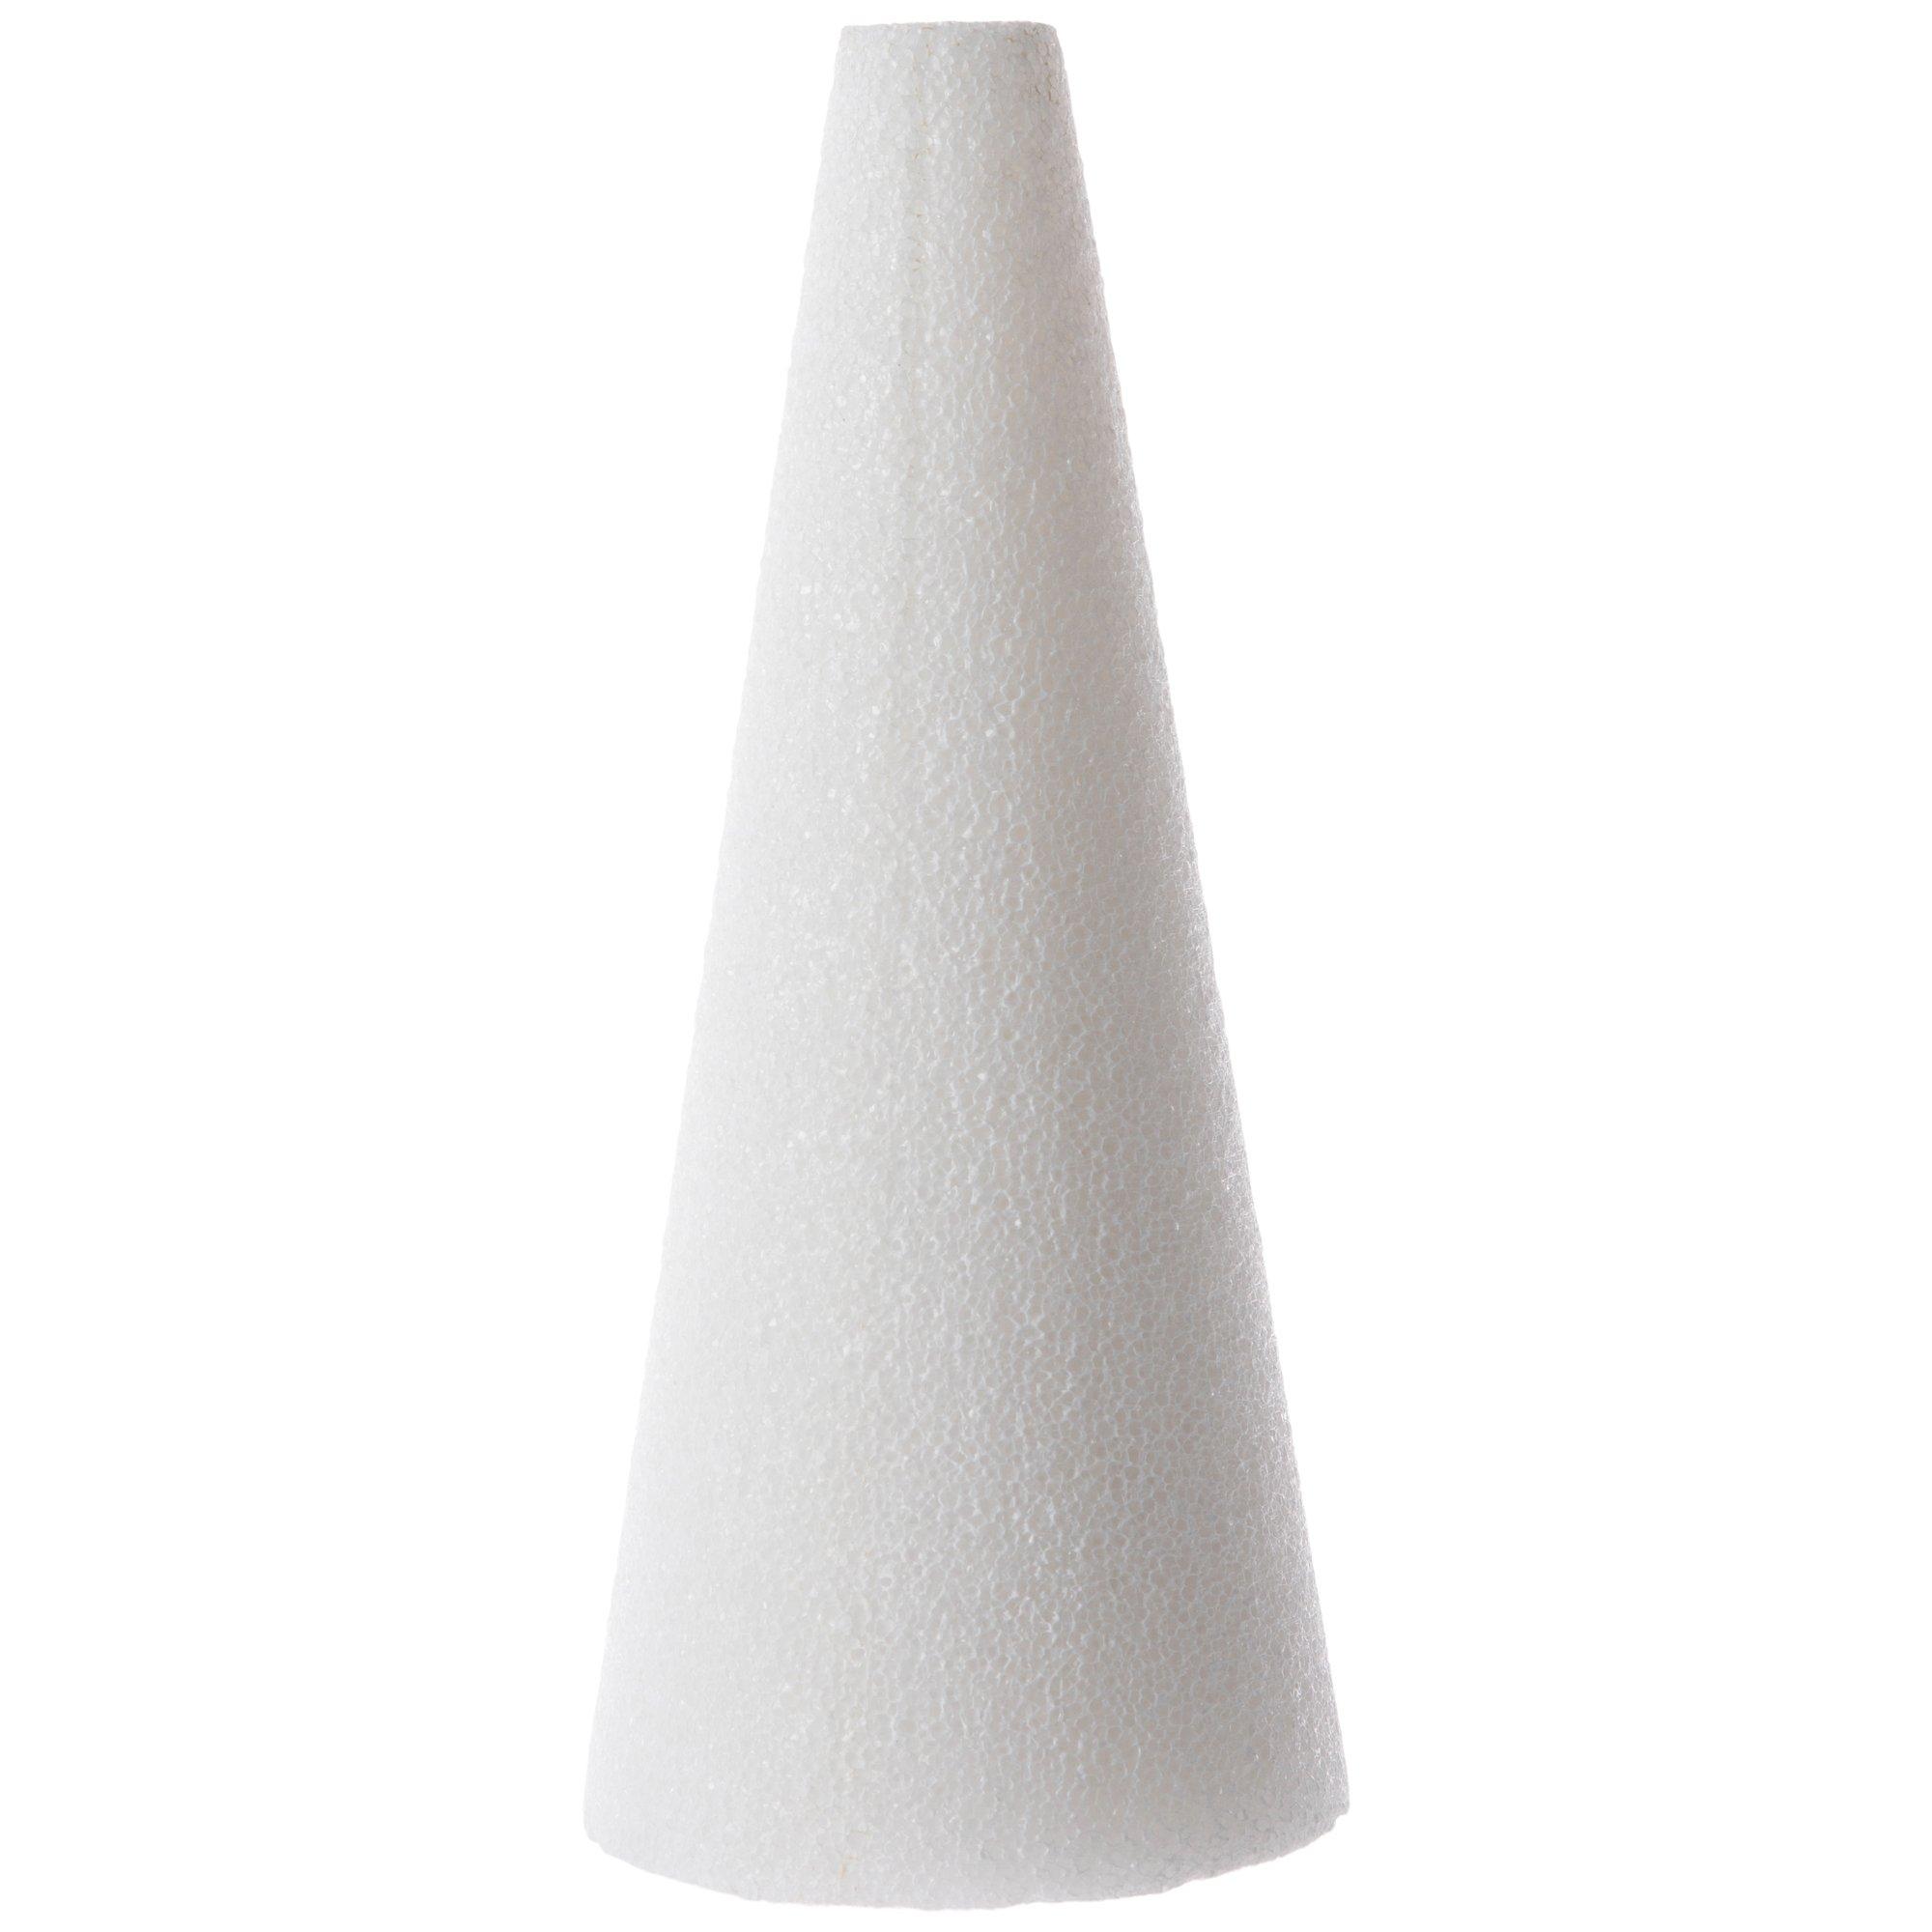 Foam Cones - #1 Styrofoam Cake Cone Supplier